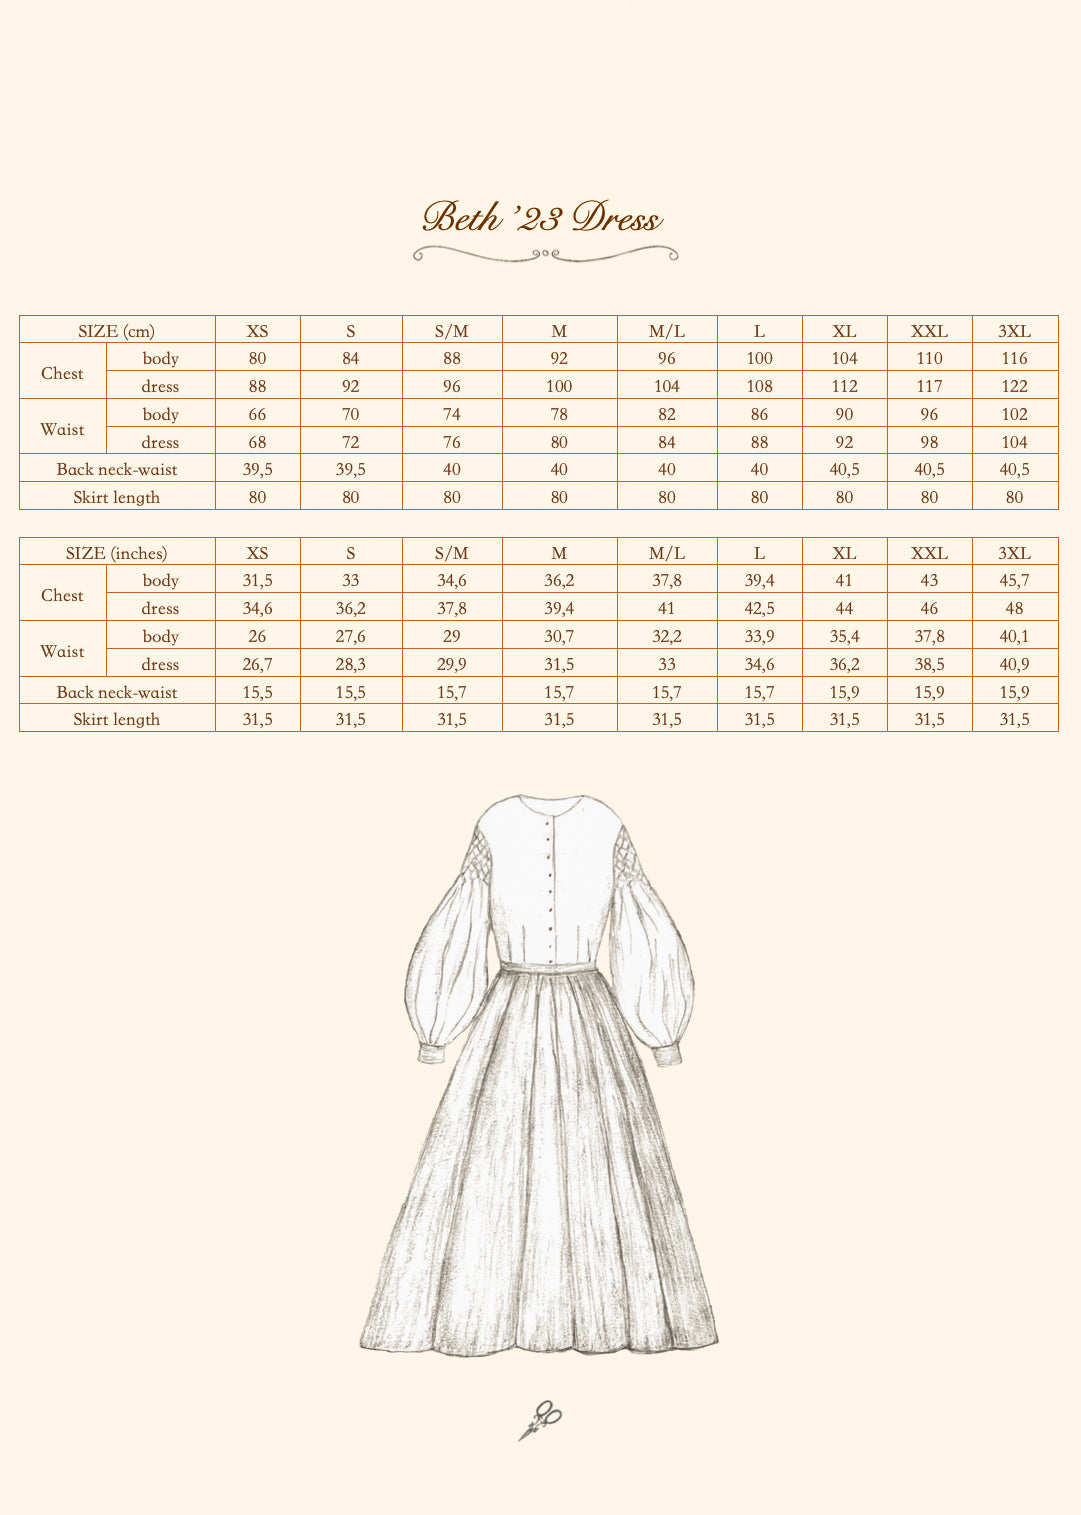 The Beth’23 Dress